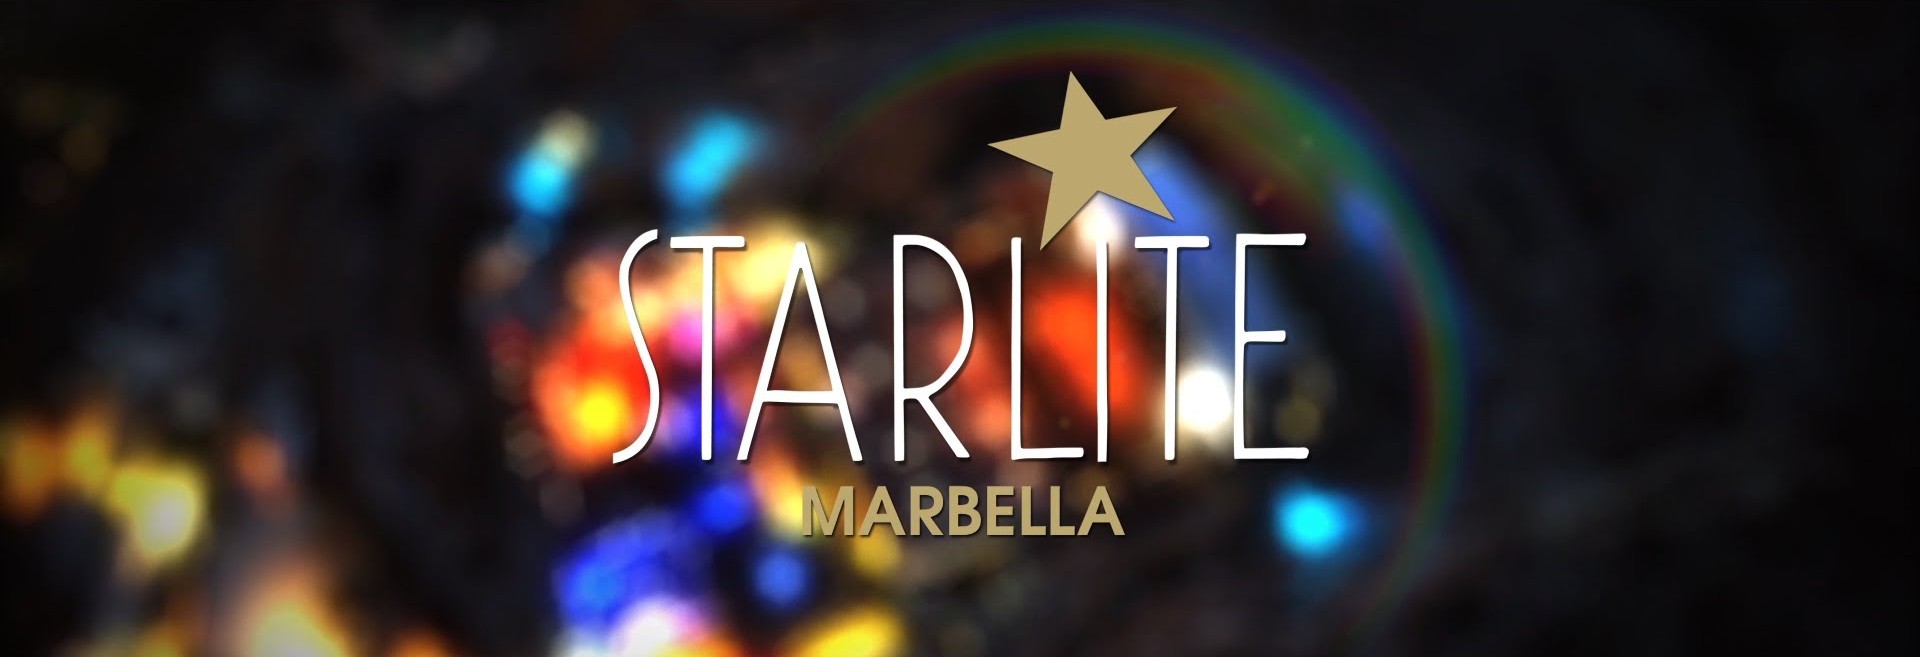 Marbella Unique Properties at Starlite